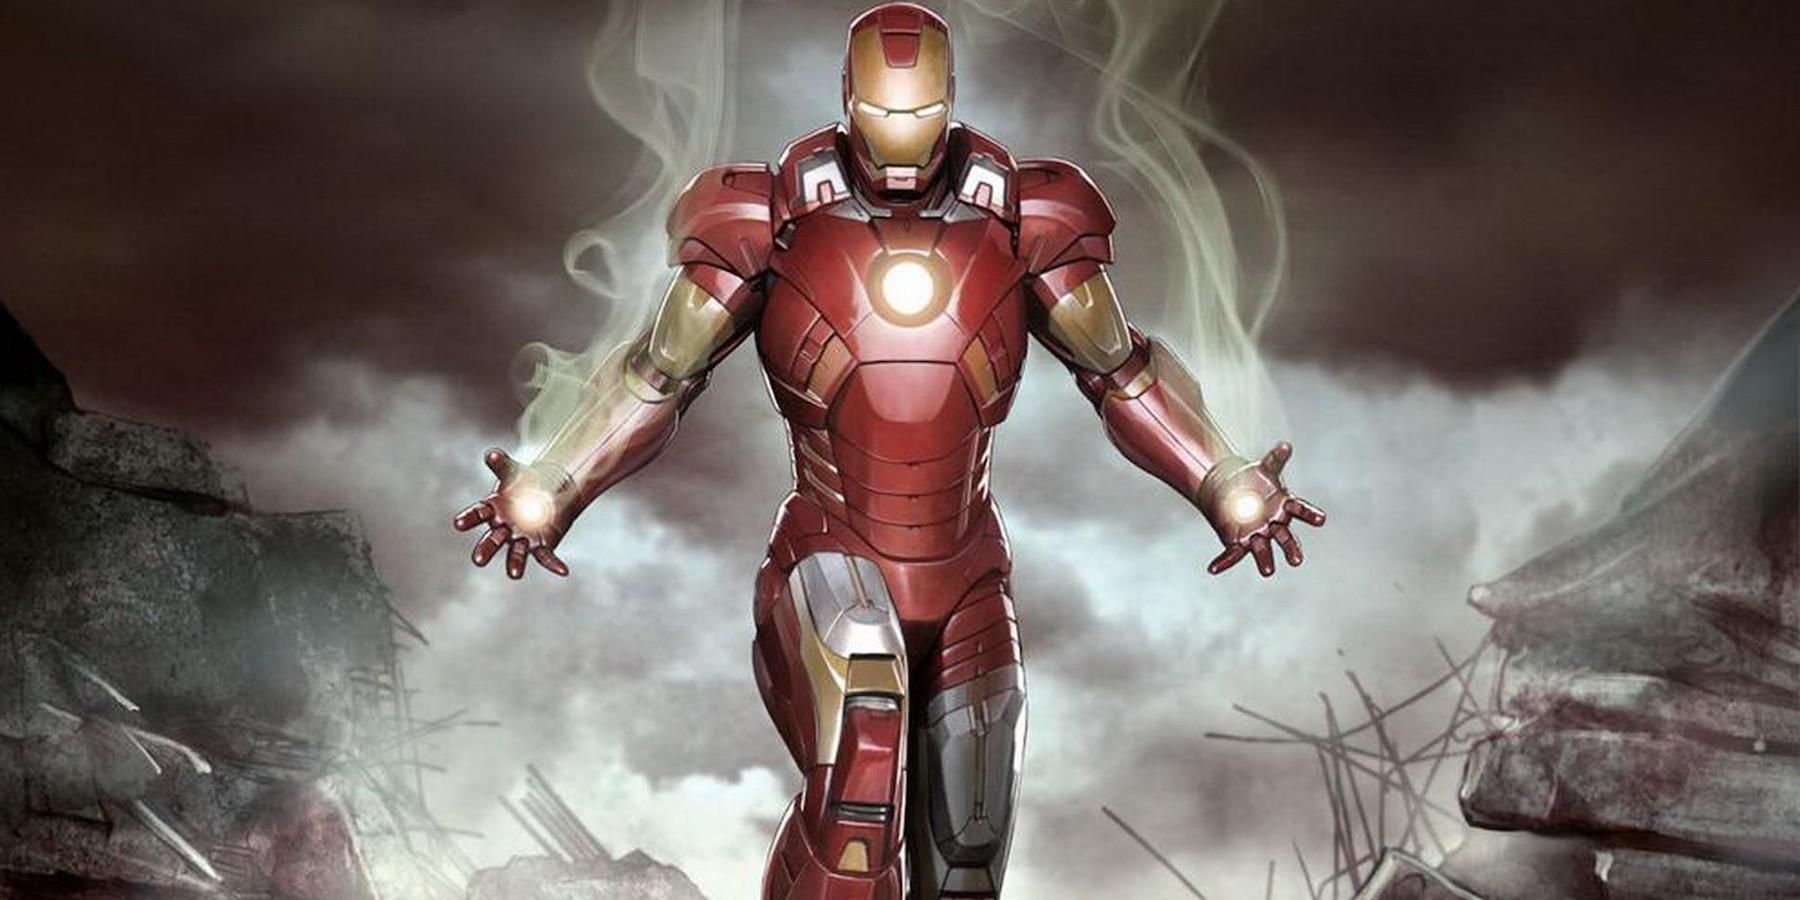 Iron Man repulsors in Marvel Comics